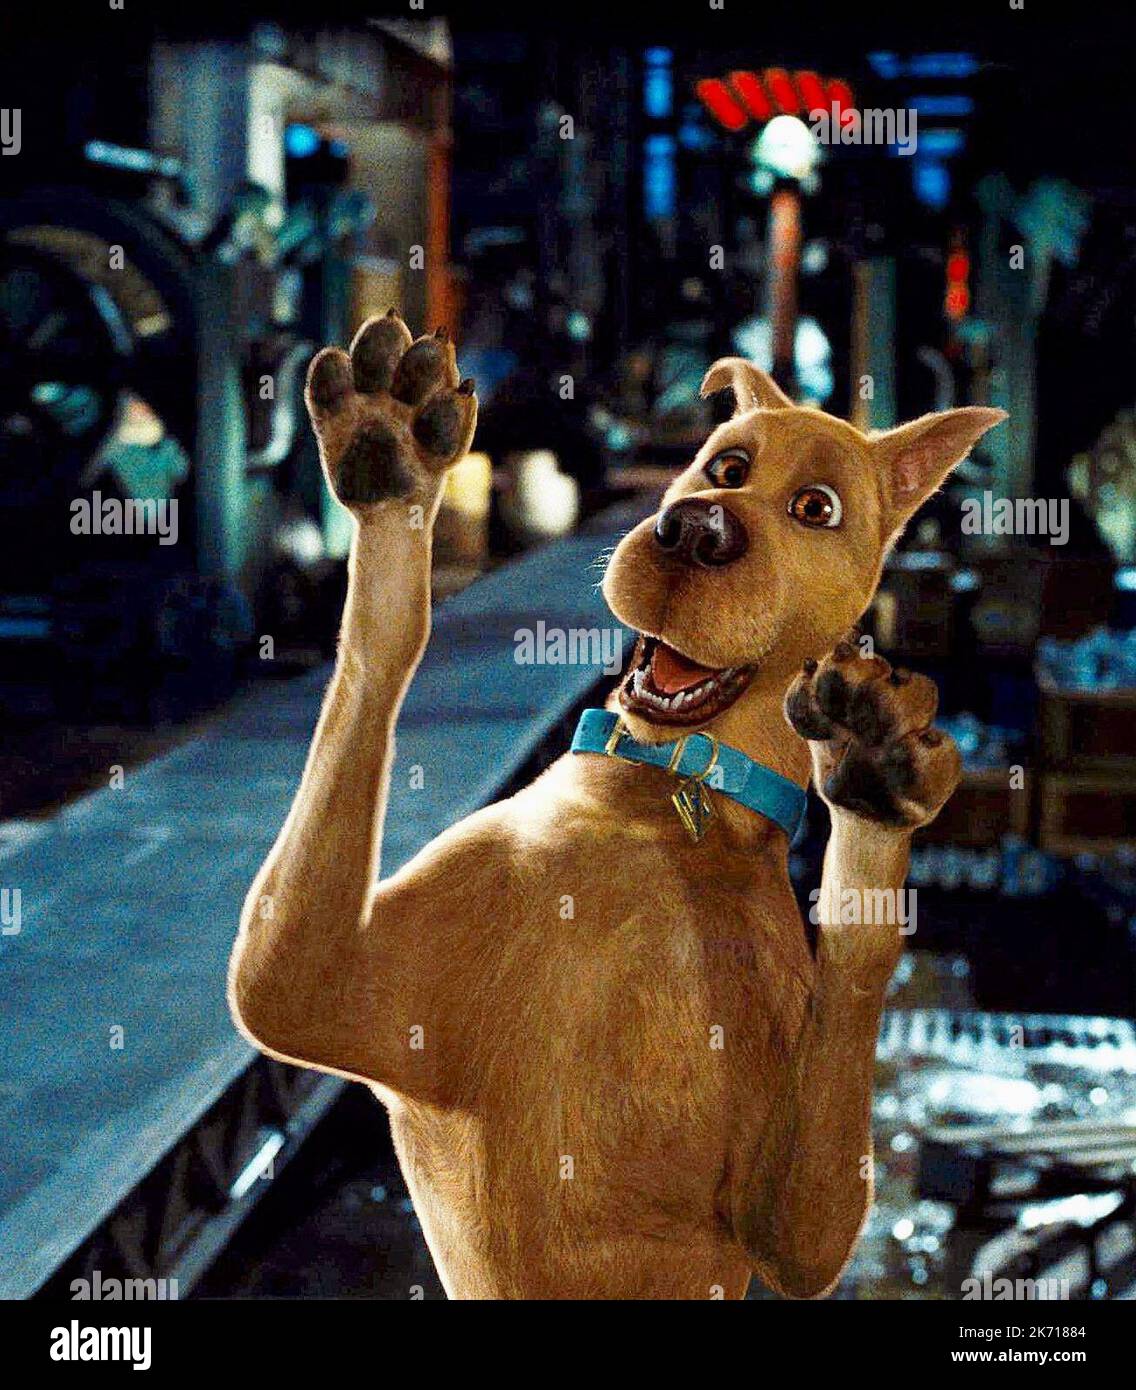 Scooby doo 2002 г. Скуби-Ду / Scooby-Doo (2002.